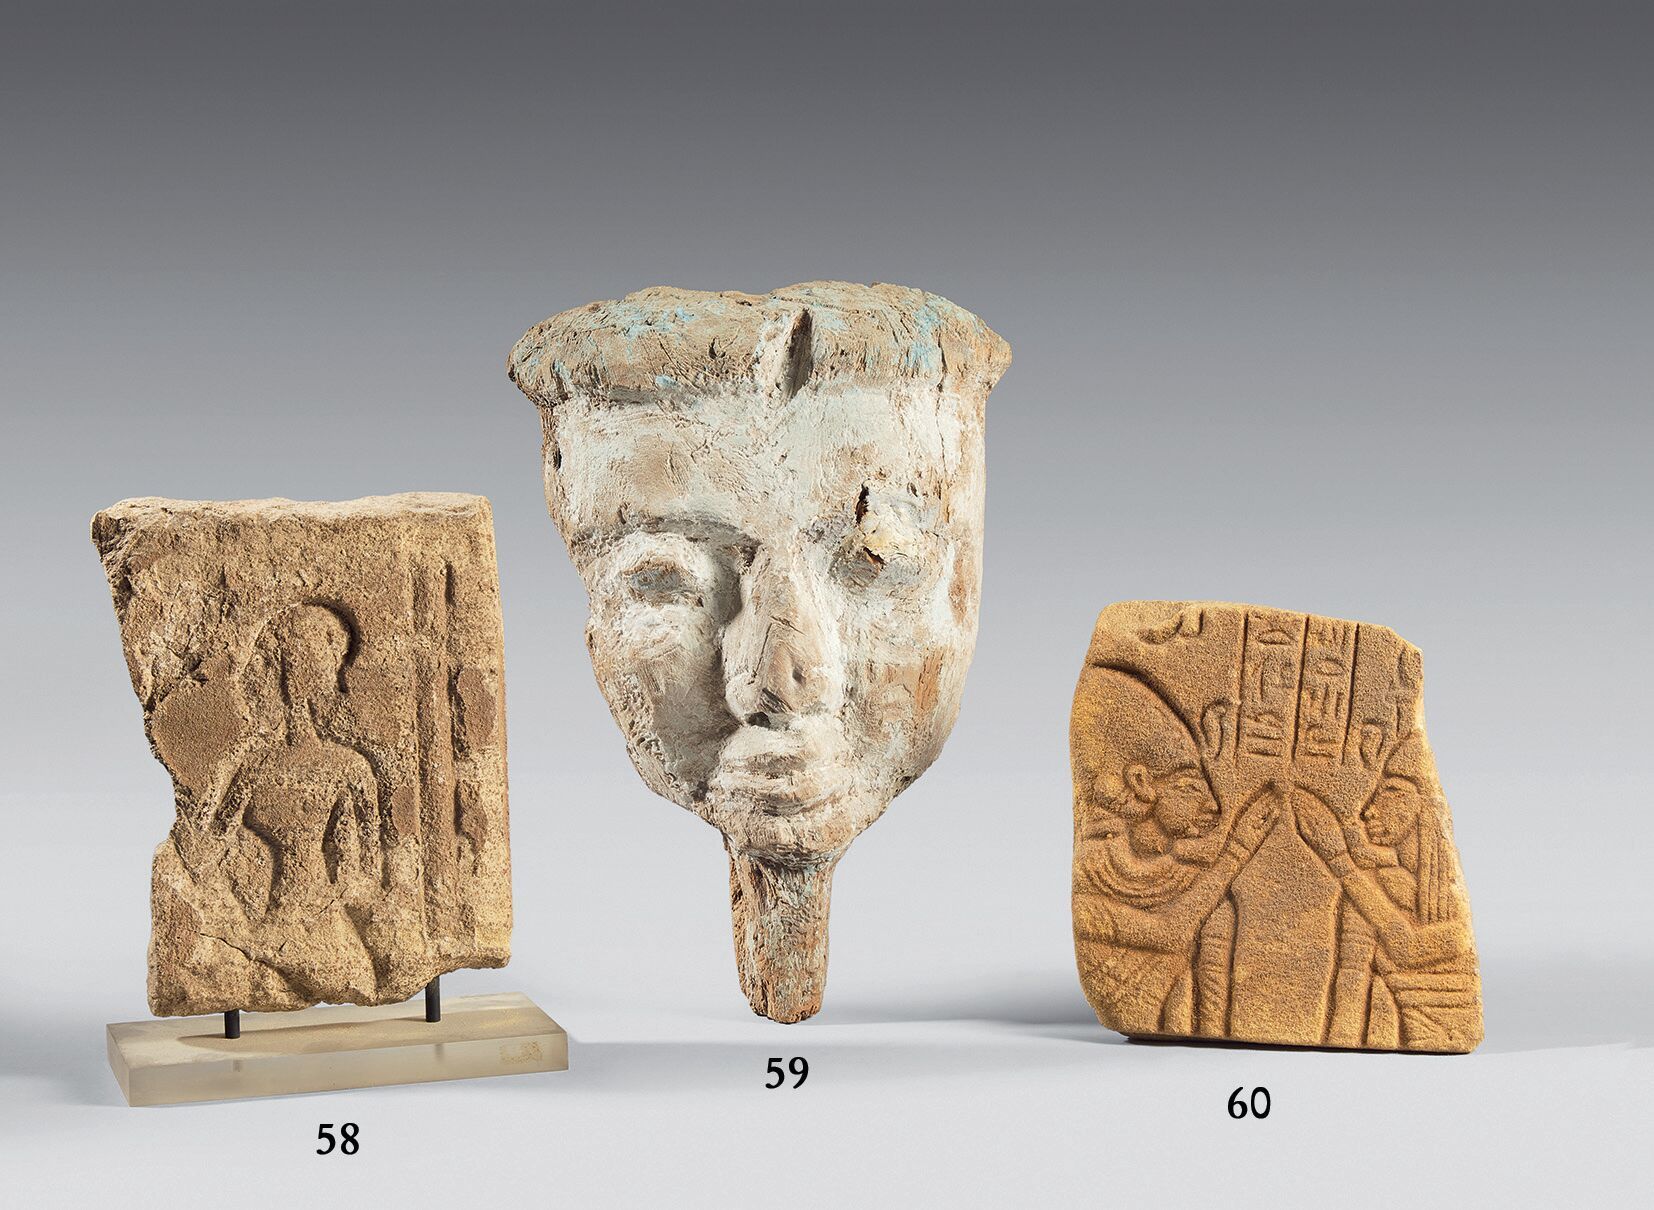 Null 残缺的浮雕，左边是一个人物。 
石头(砂岩?)。 
埃及。新王国或晚期。
(意外事件。)
尺寸：21 x 16厘米
出处：标签 "30/06/69 M&hellip;